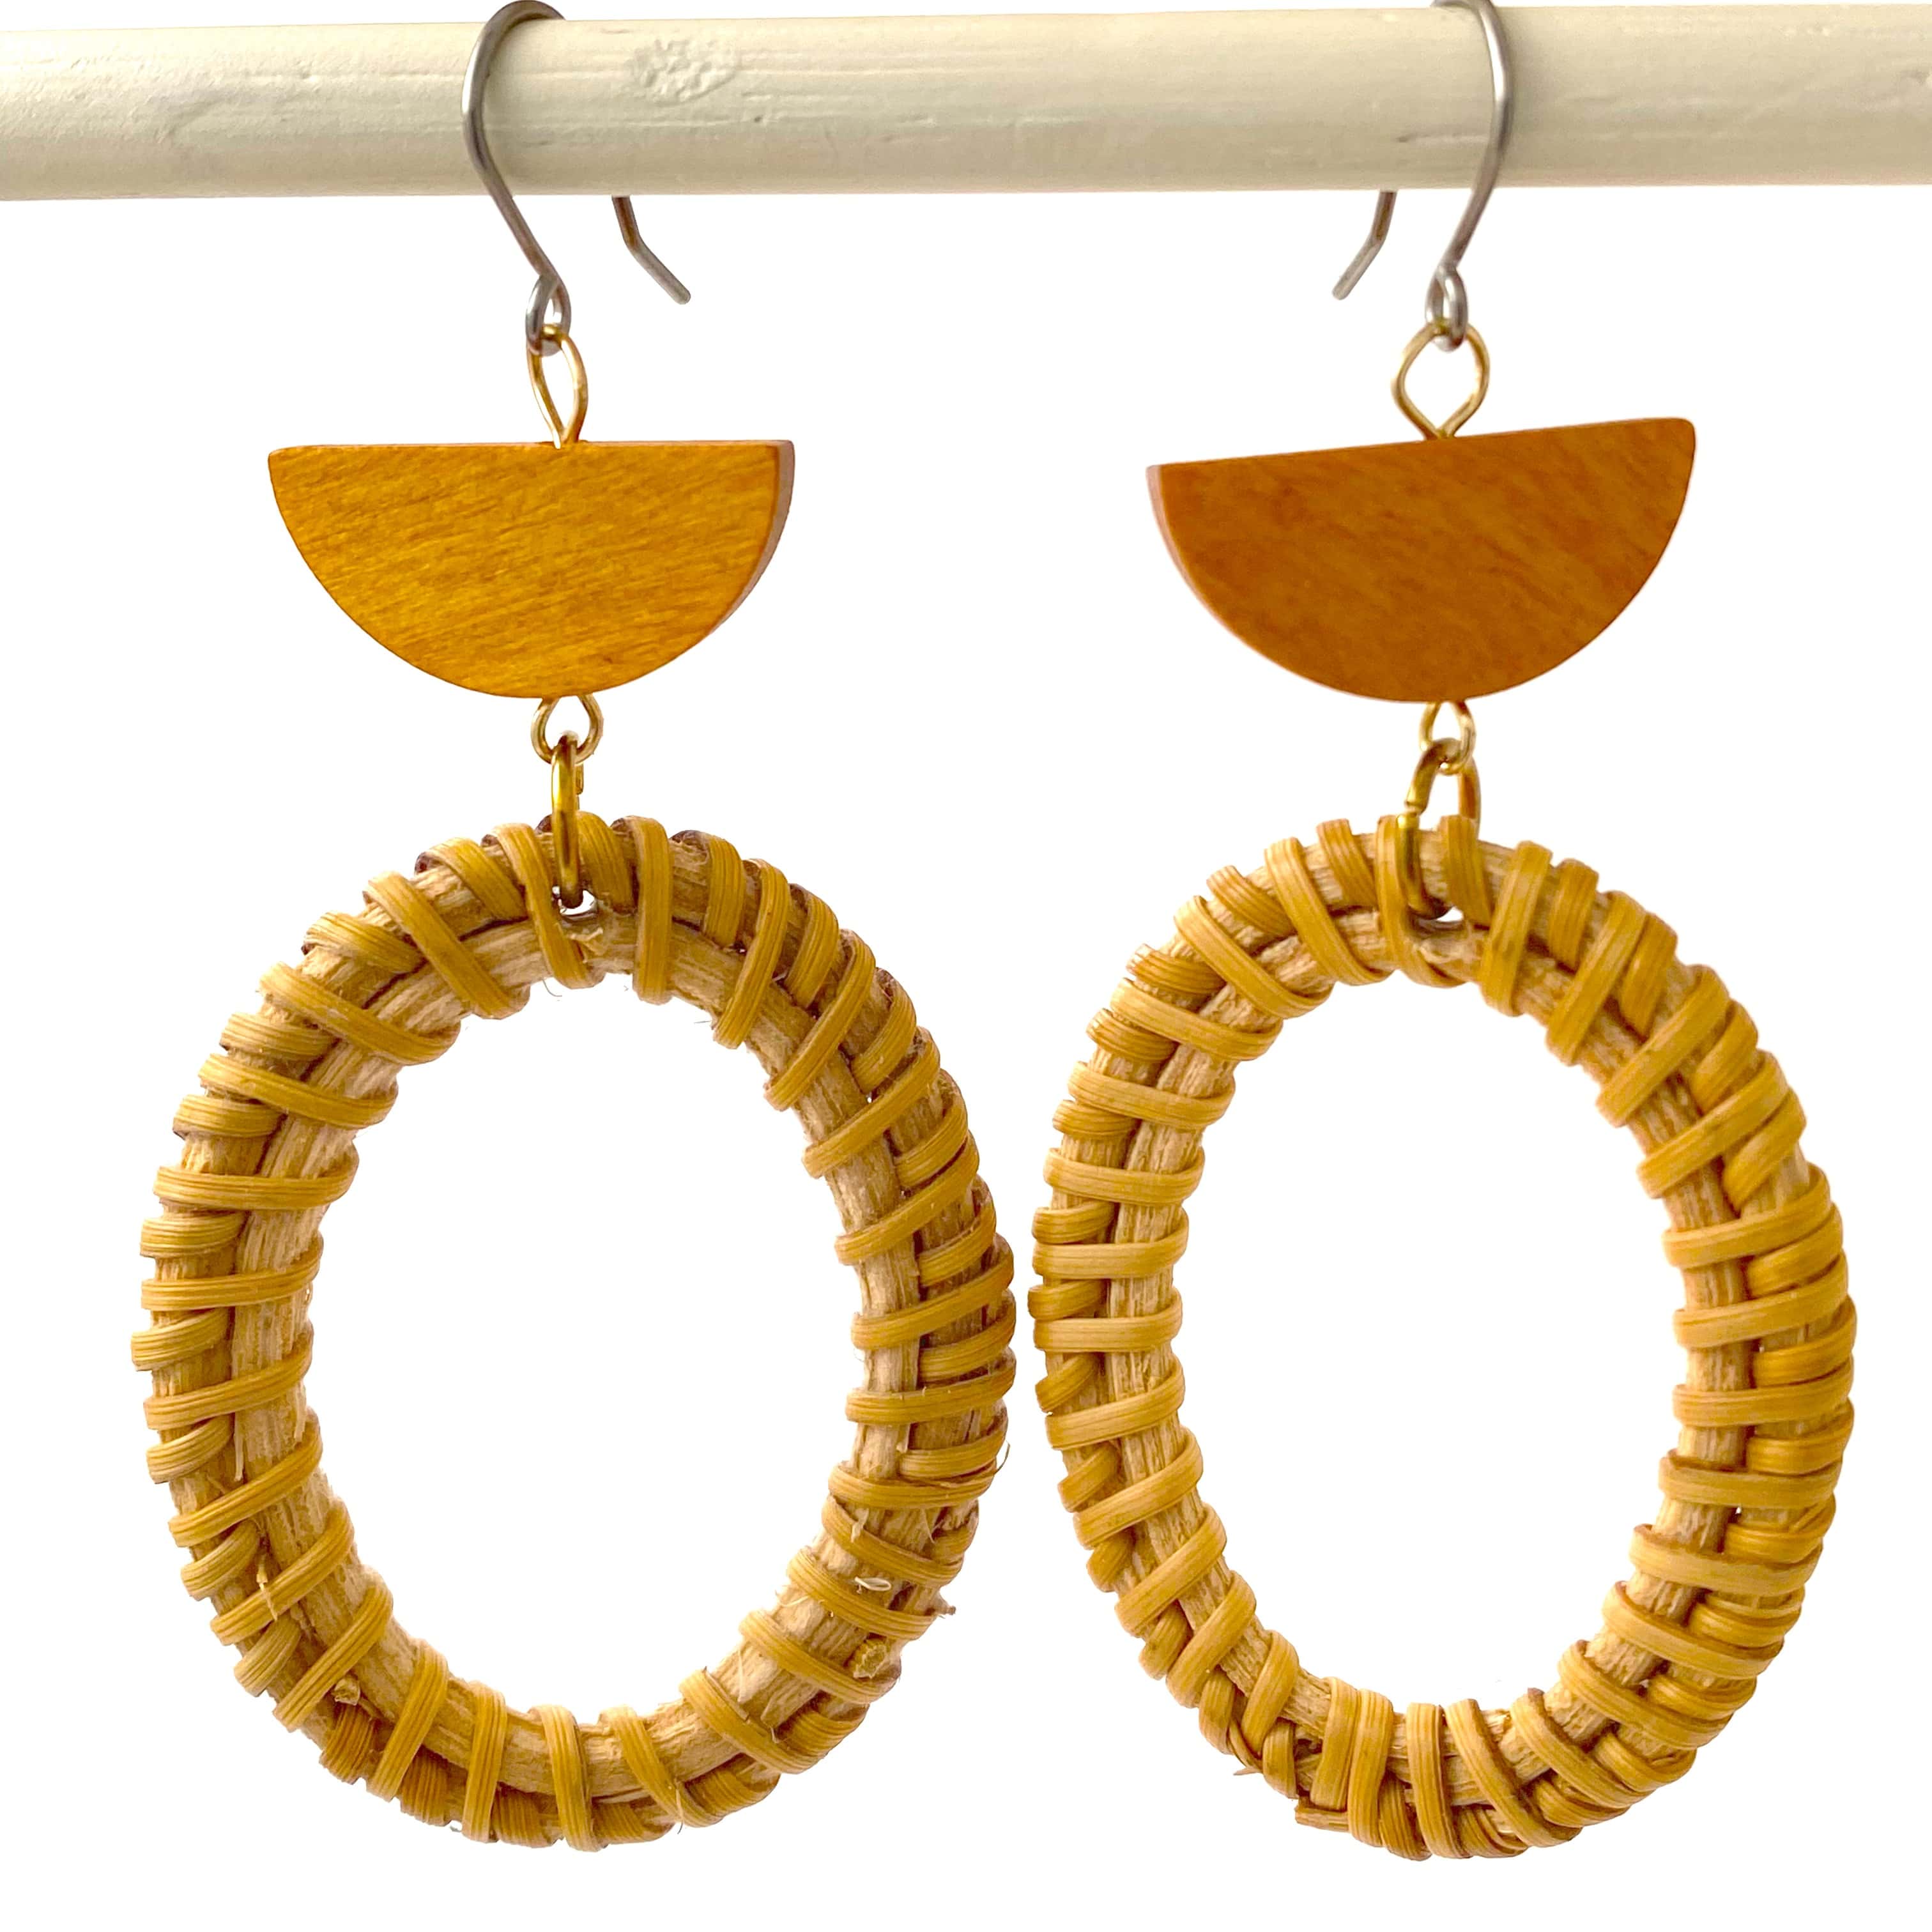 Bohemia style wicker and wood geometric earrings.